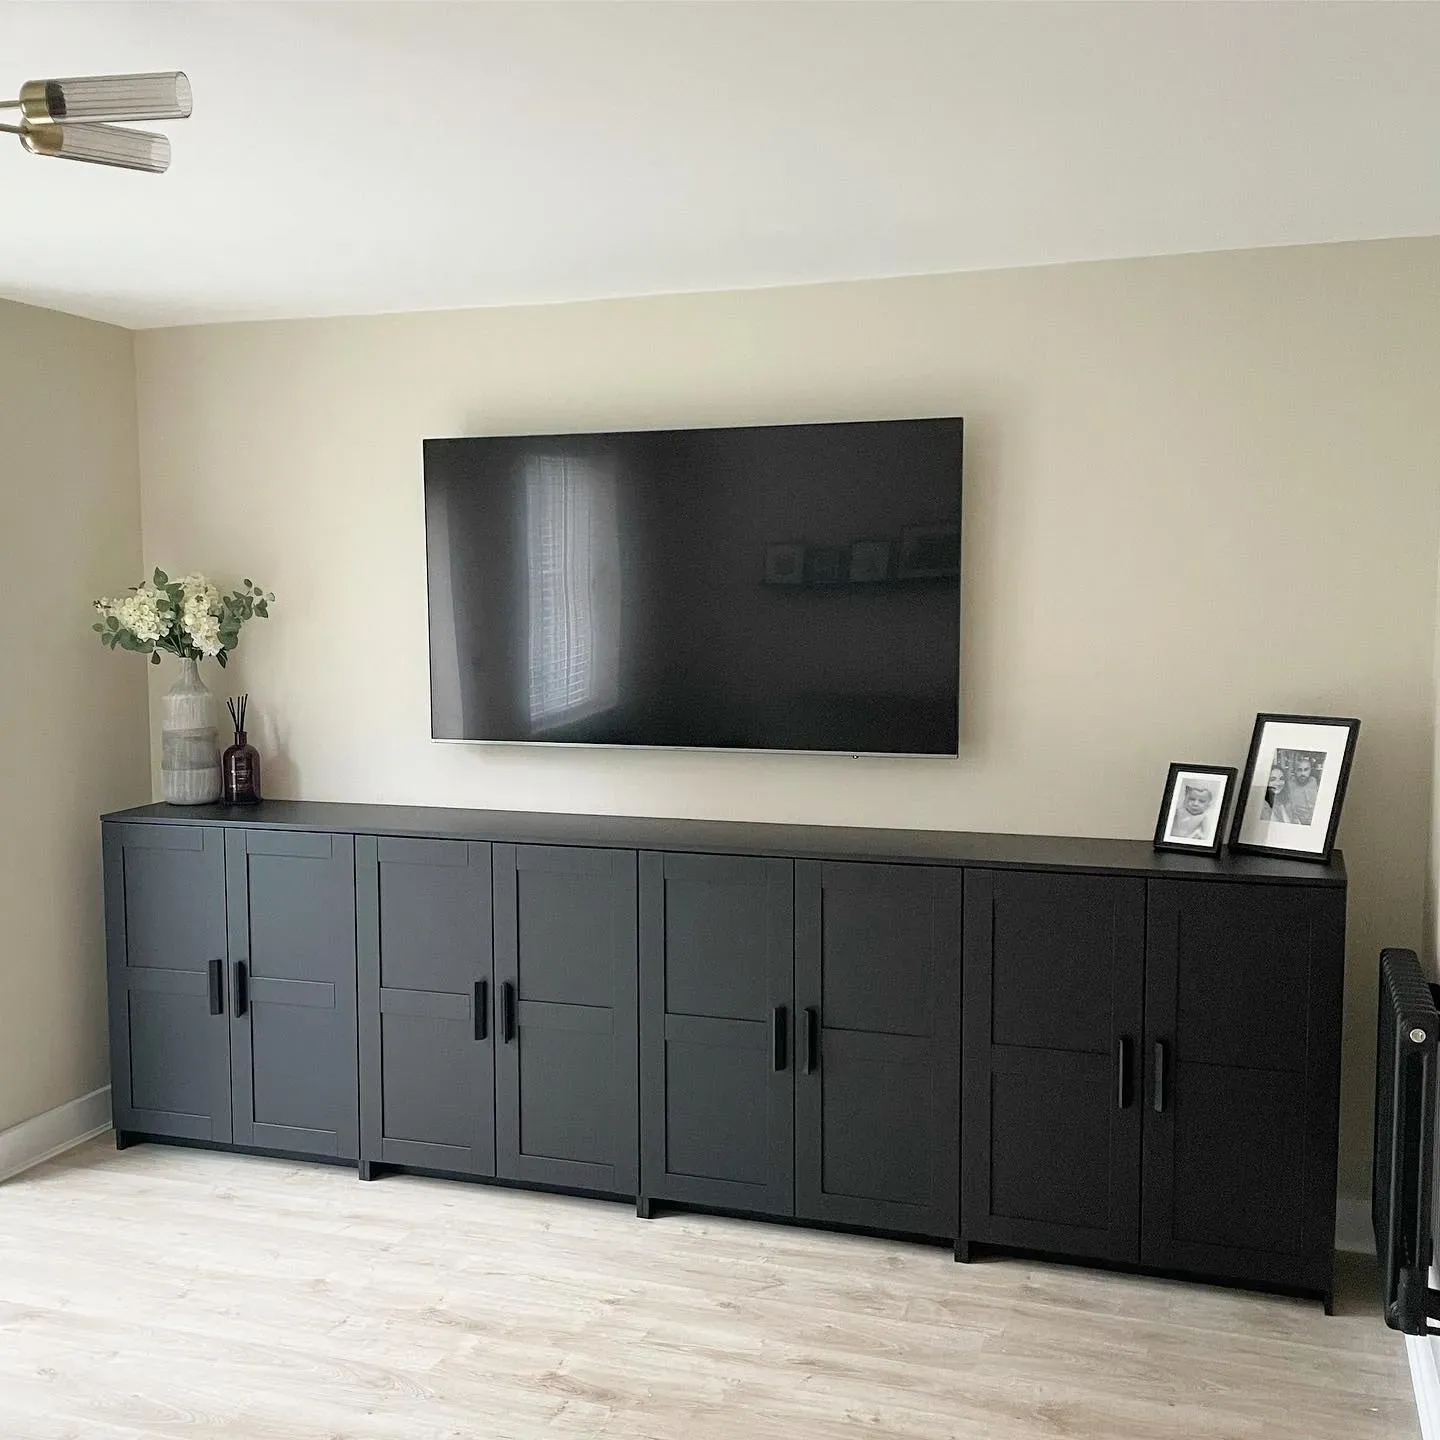 Dulux Bleached Lichen 3 minimalist living room color